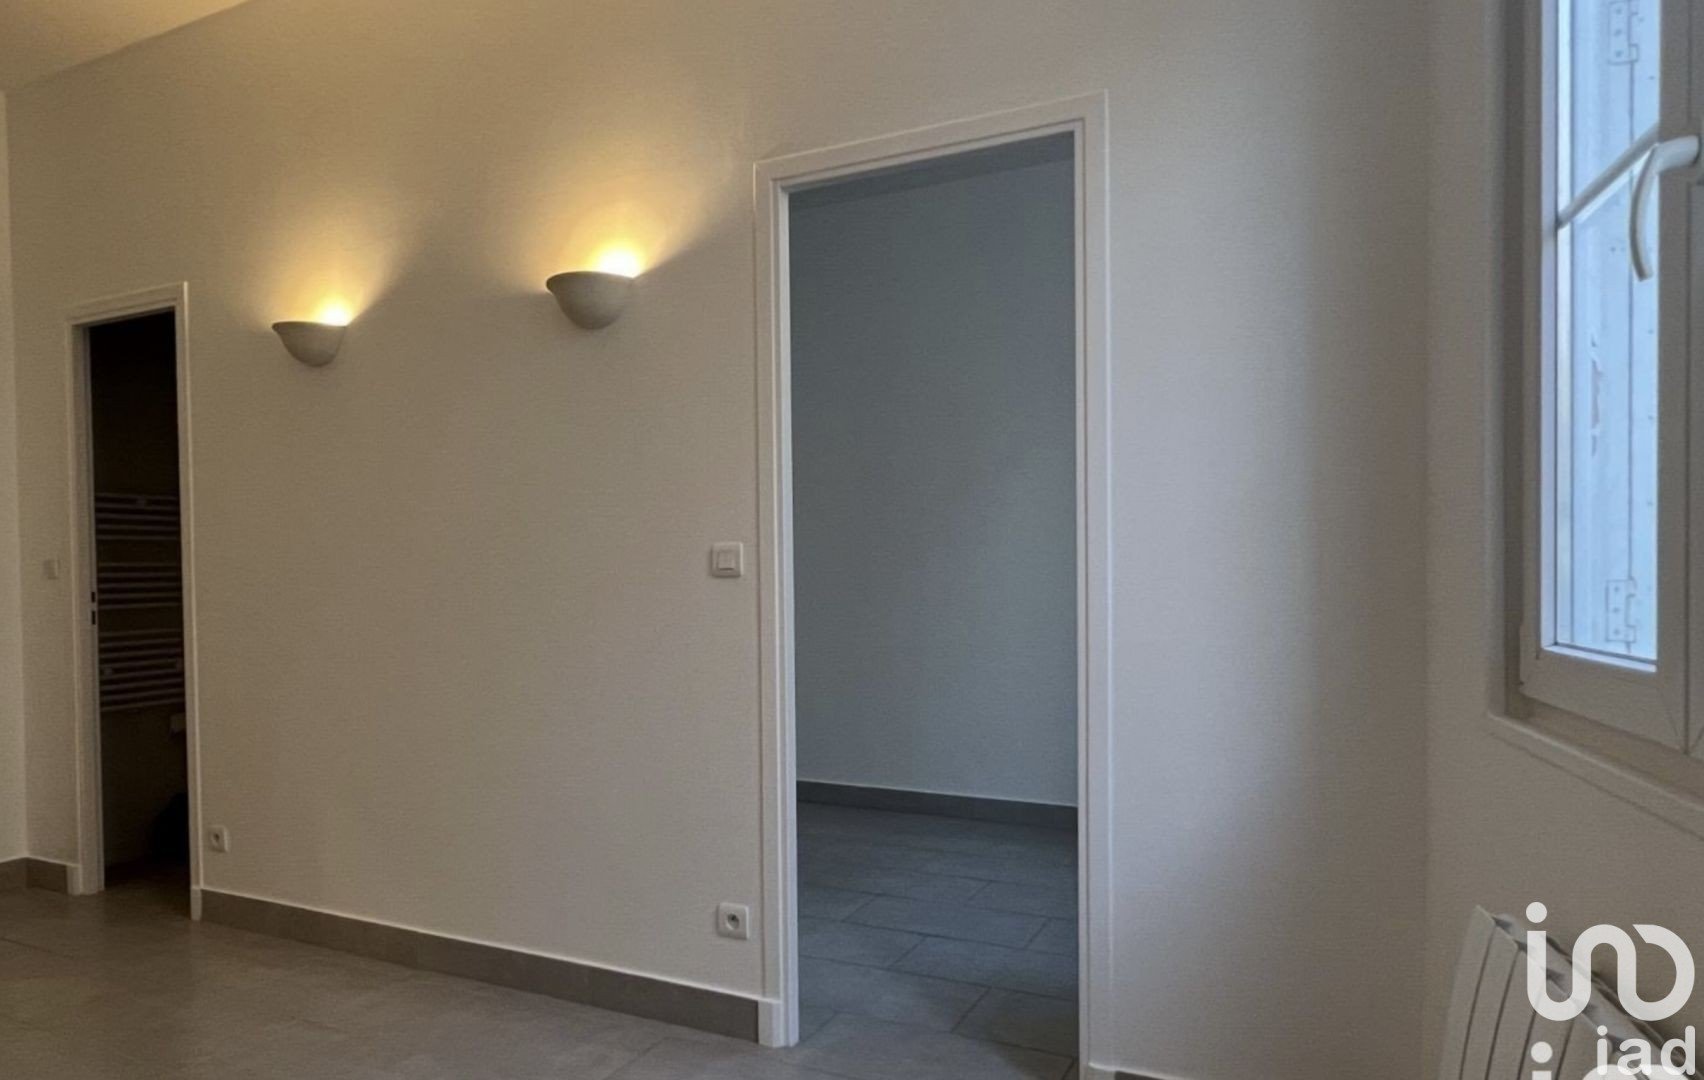 Appartement a louer malakoff - 2 pièce(s) - 30 m2 - Surfyn